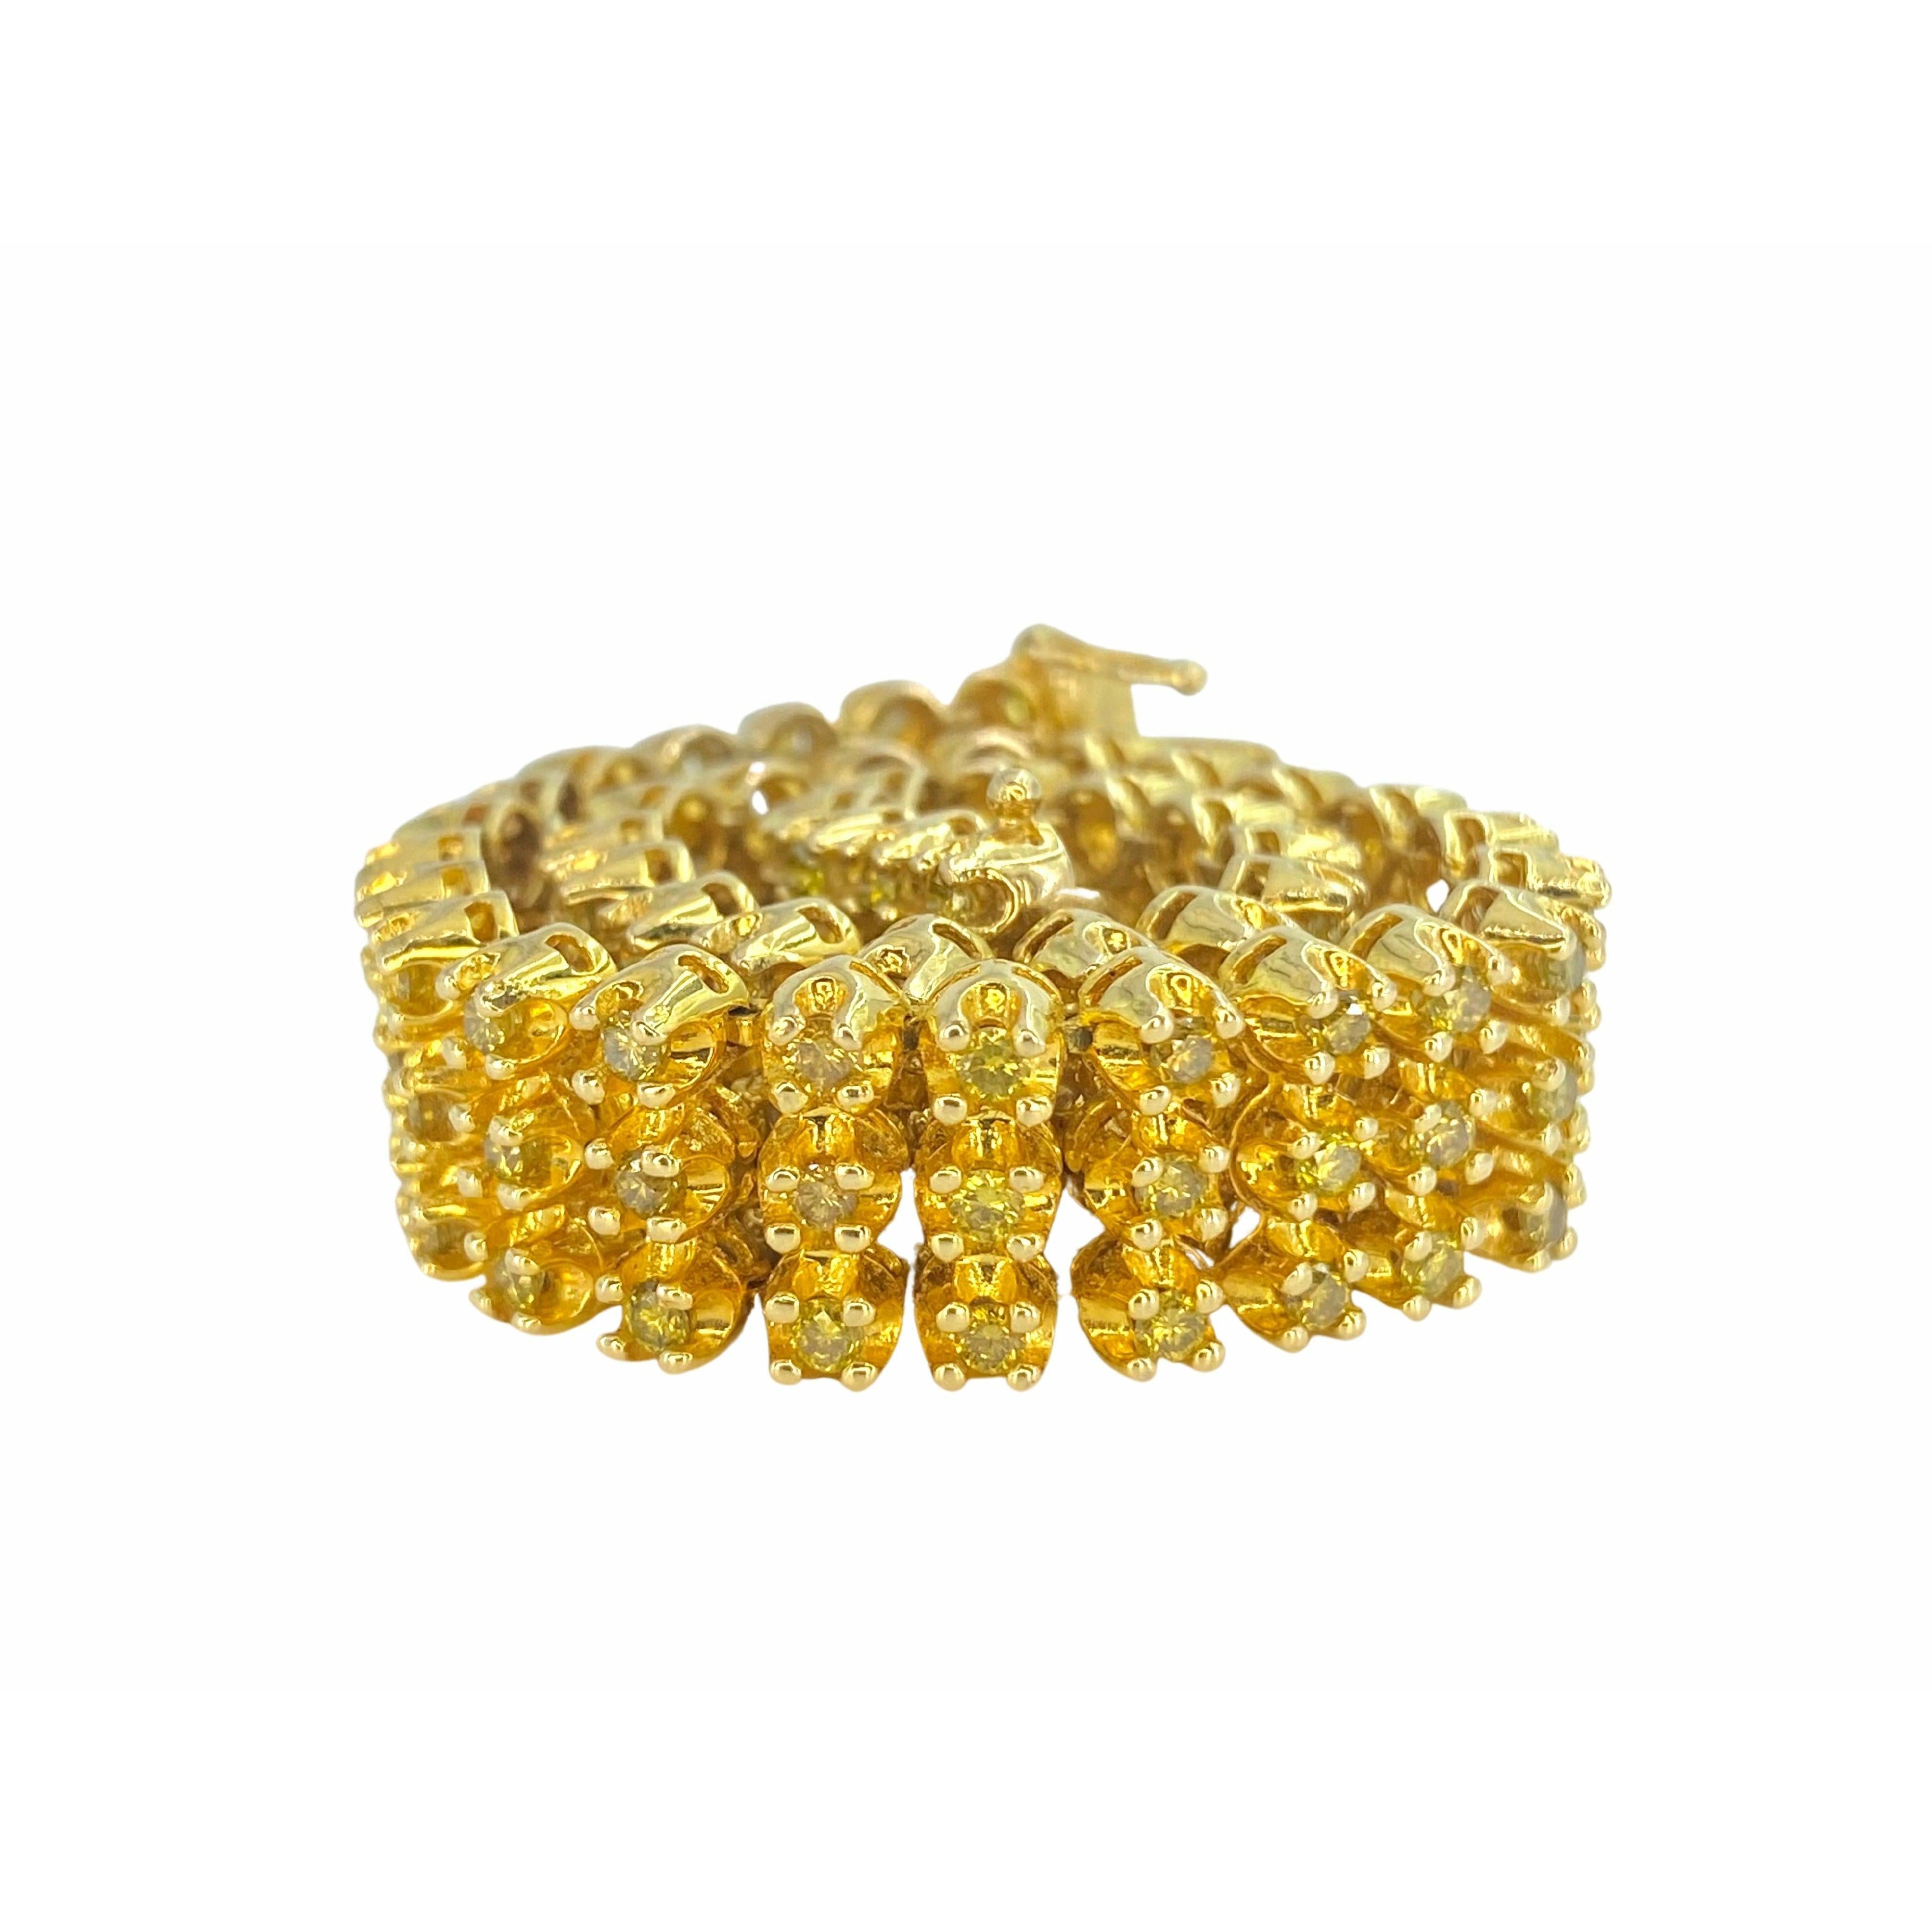 14k Solid Gold Natural Yellow Diamond Link Bracelet - 7 inch long - 12mm width - ASSAY